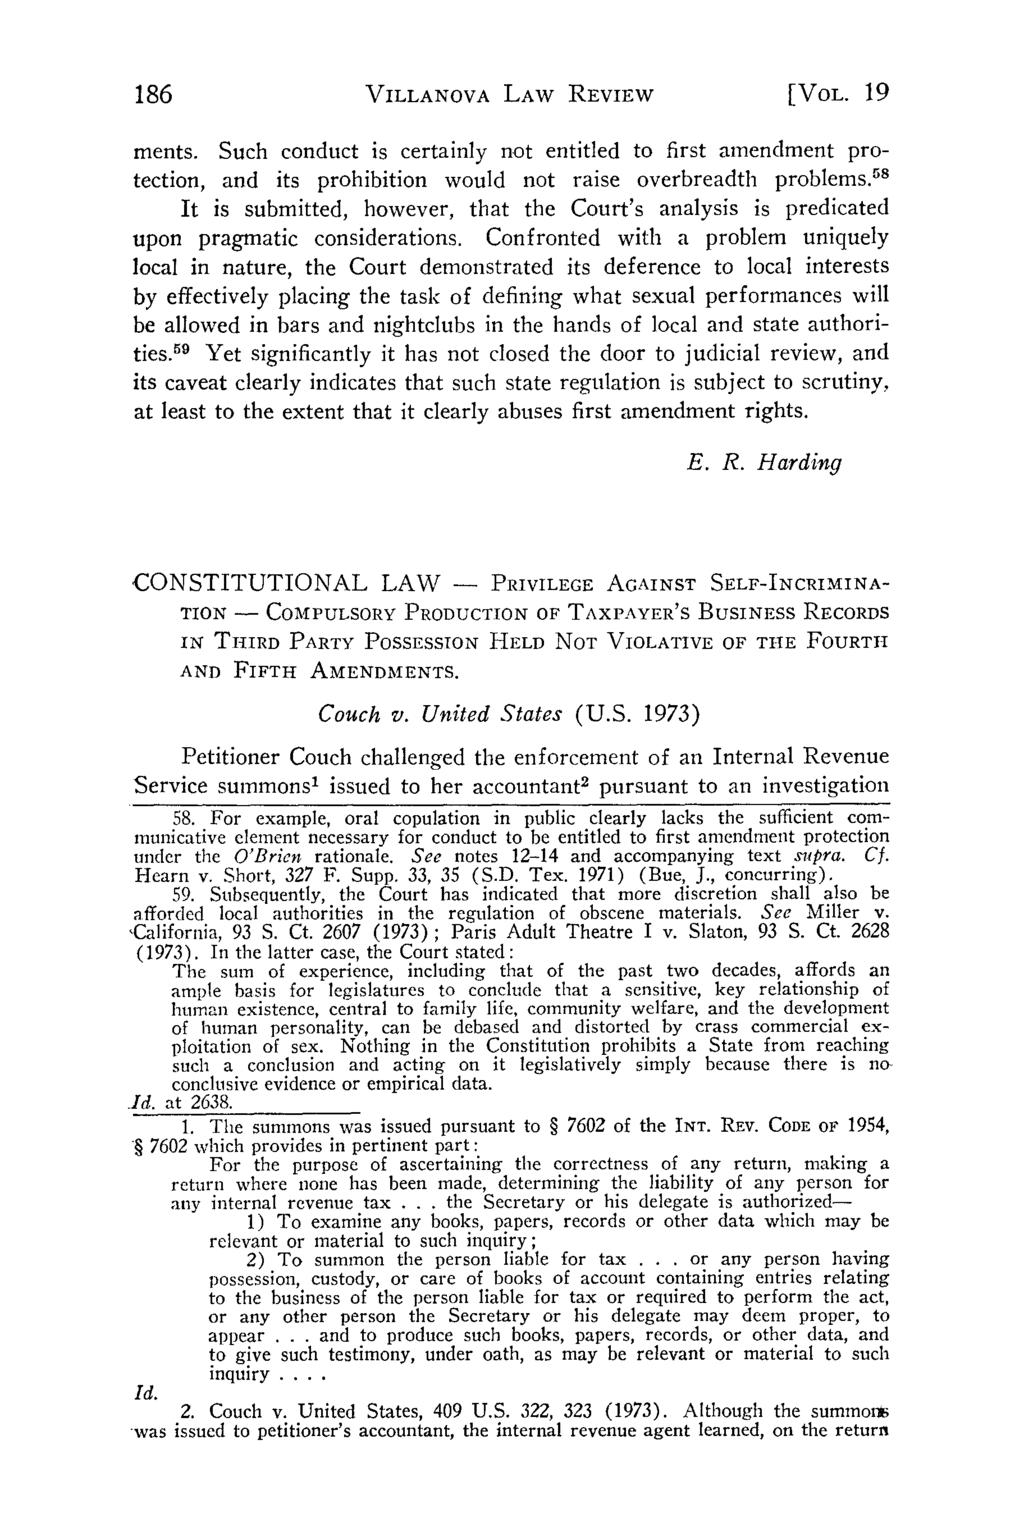 Coopersmith: Constitutional Law - Privilege against Self-Incrimination - Compu VILLANOVA LAW REVIEW [VOL. 19 ments.